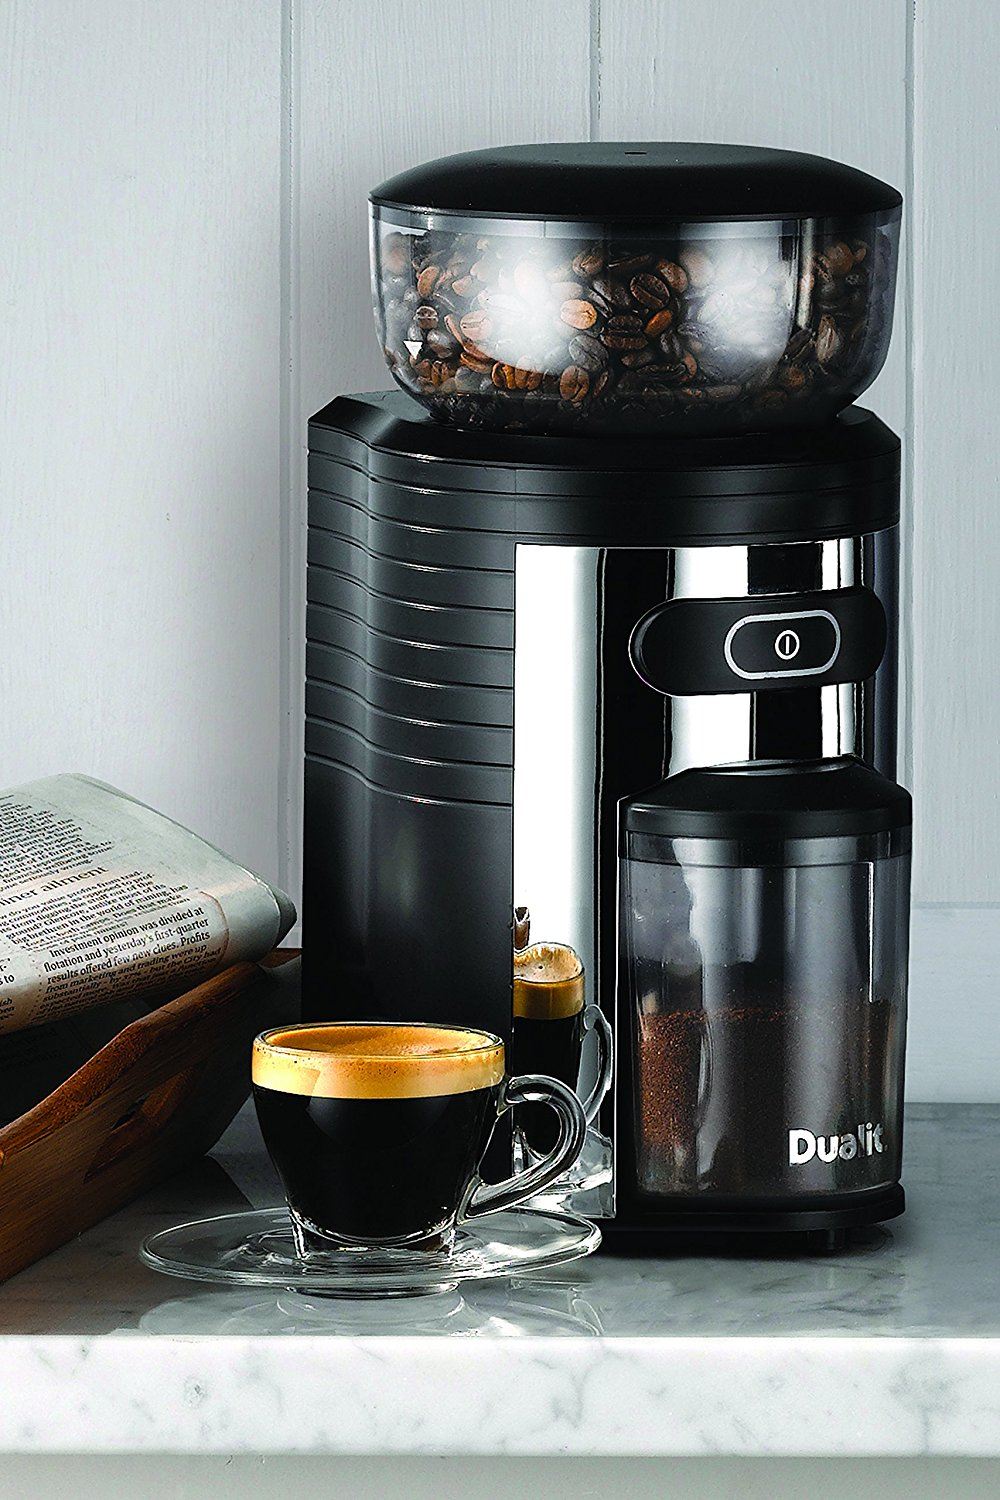 Dualit 75015 electric burr coffee grinder